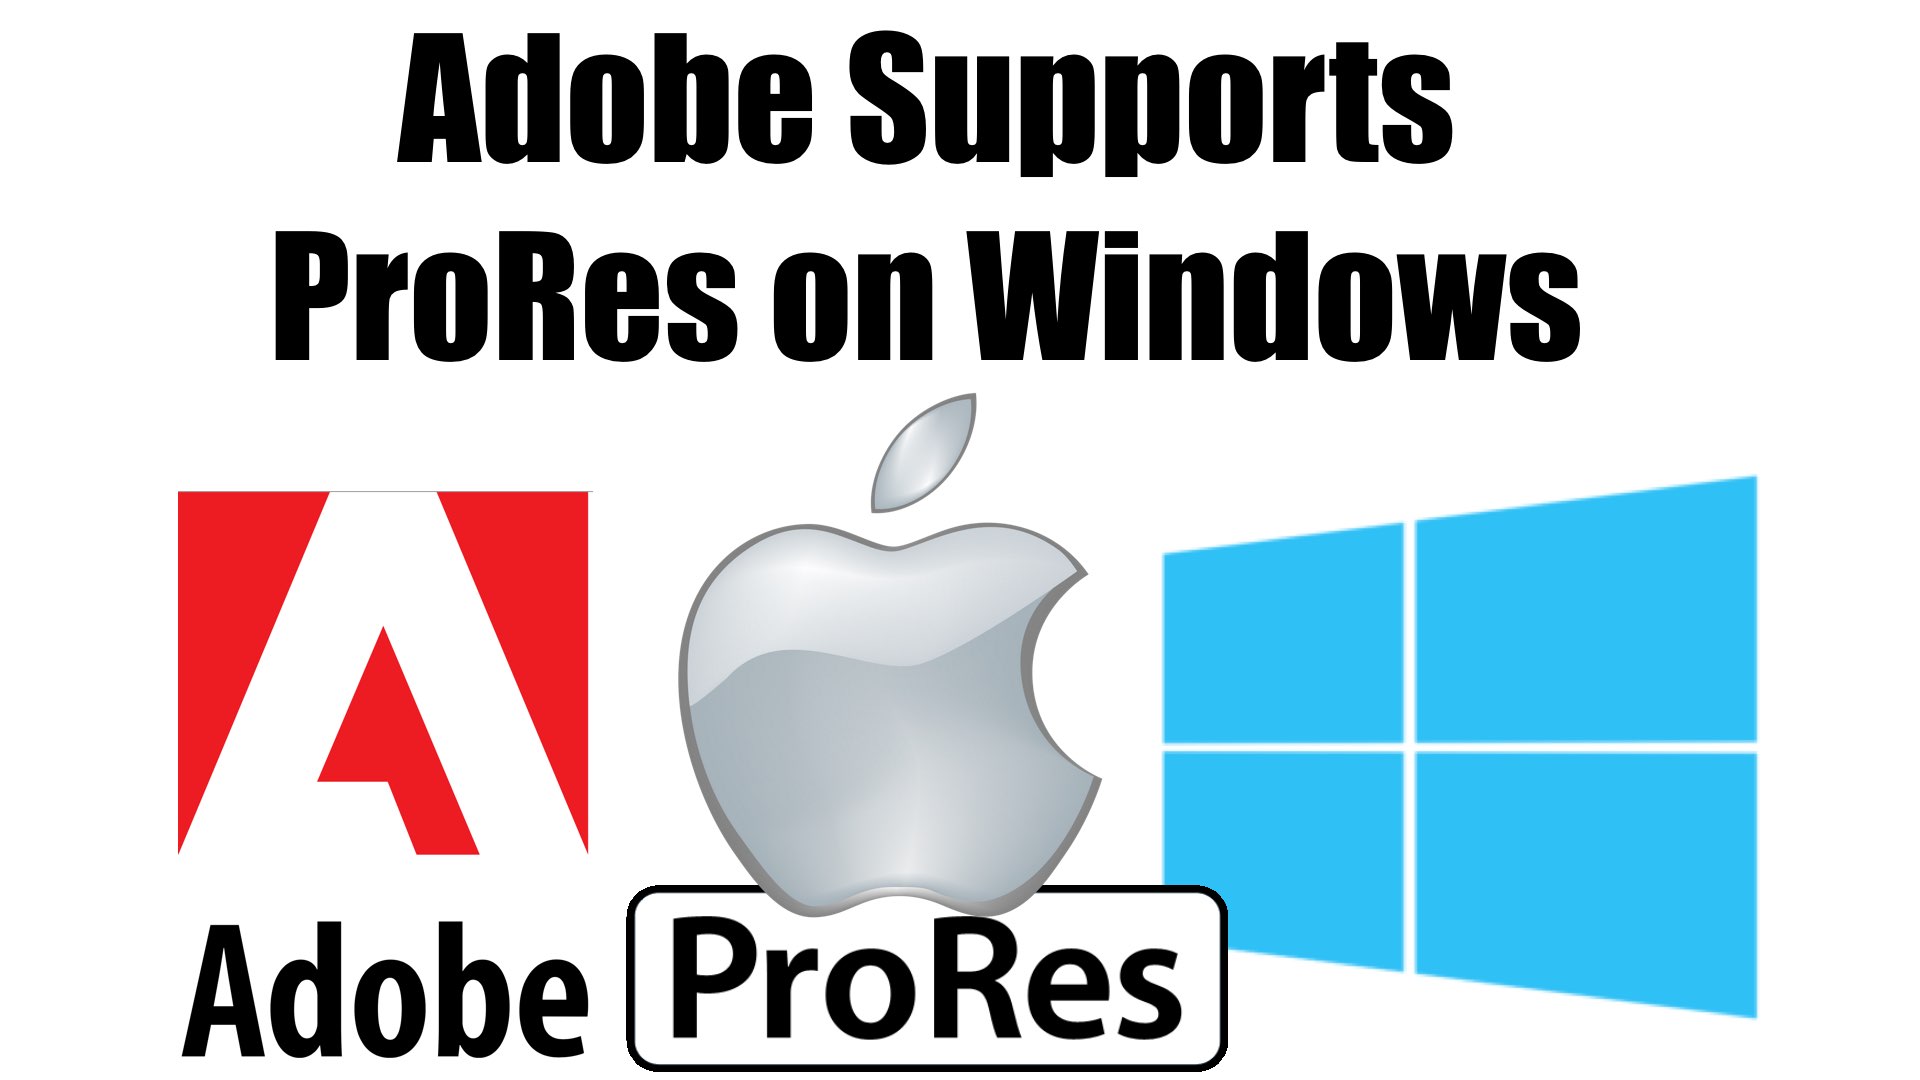 Adobe, Apple ProRes and Windows